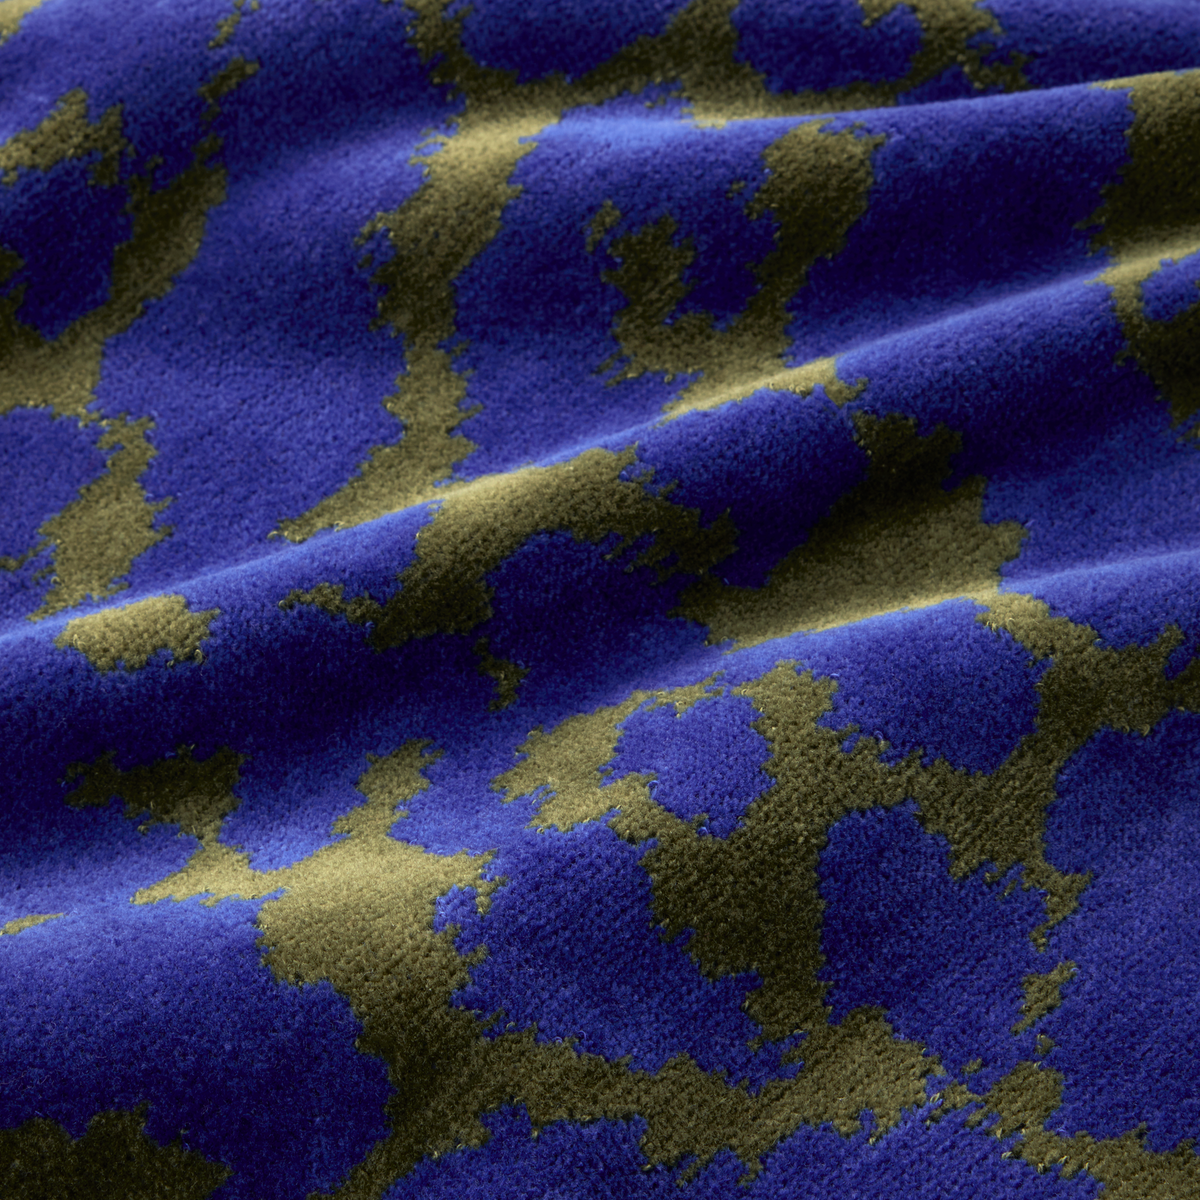 Swatch Sample of Yves Delorme Jaguar Beach Towel in Indigo Color